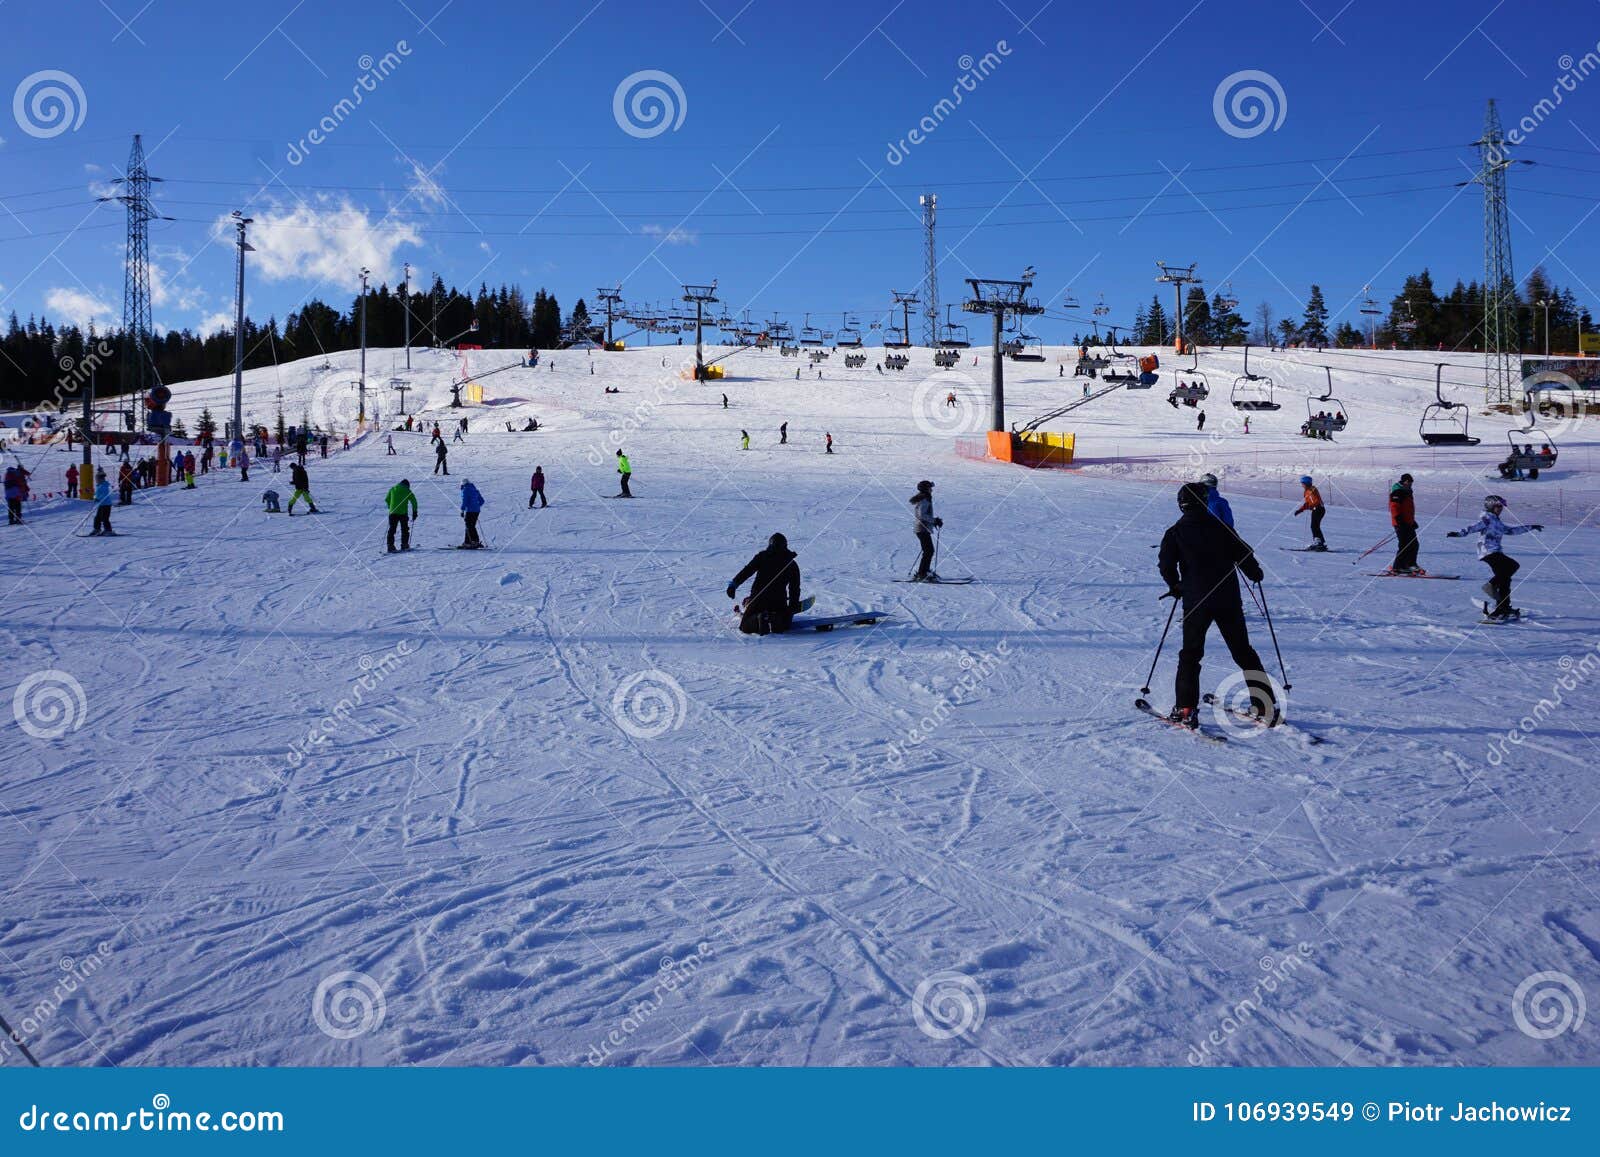 Young Boy on Ski Lift on Bania Slope Editorial Stock Image - Image of ...